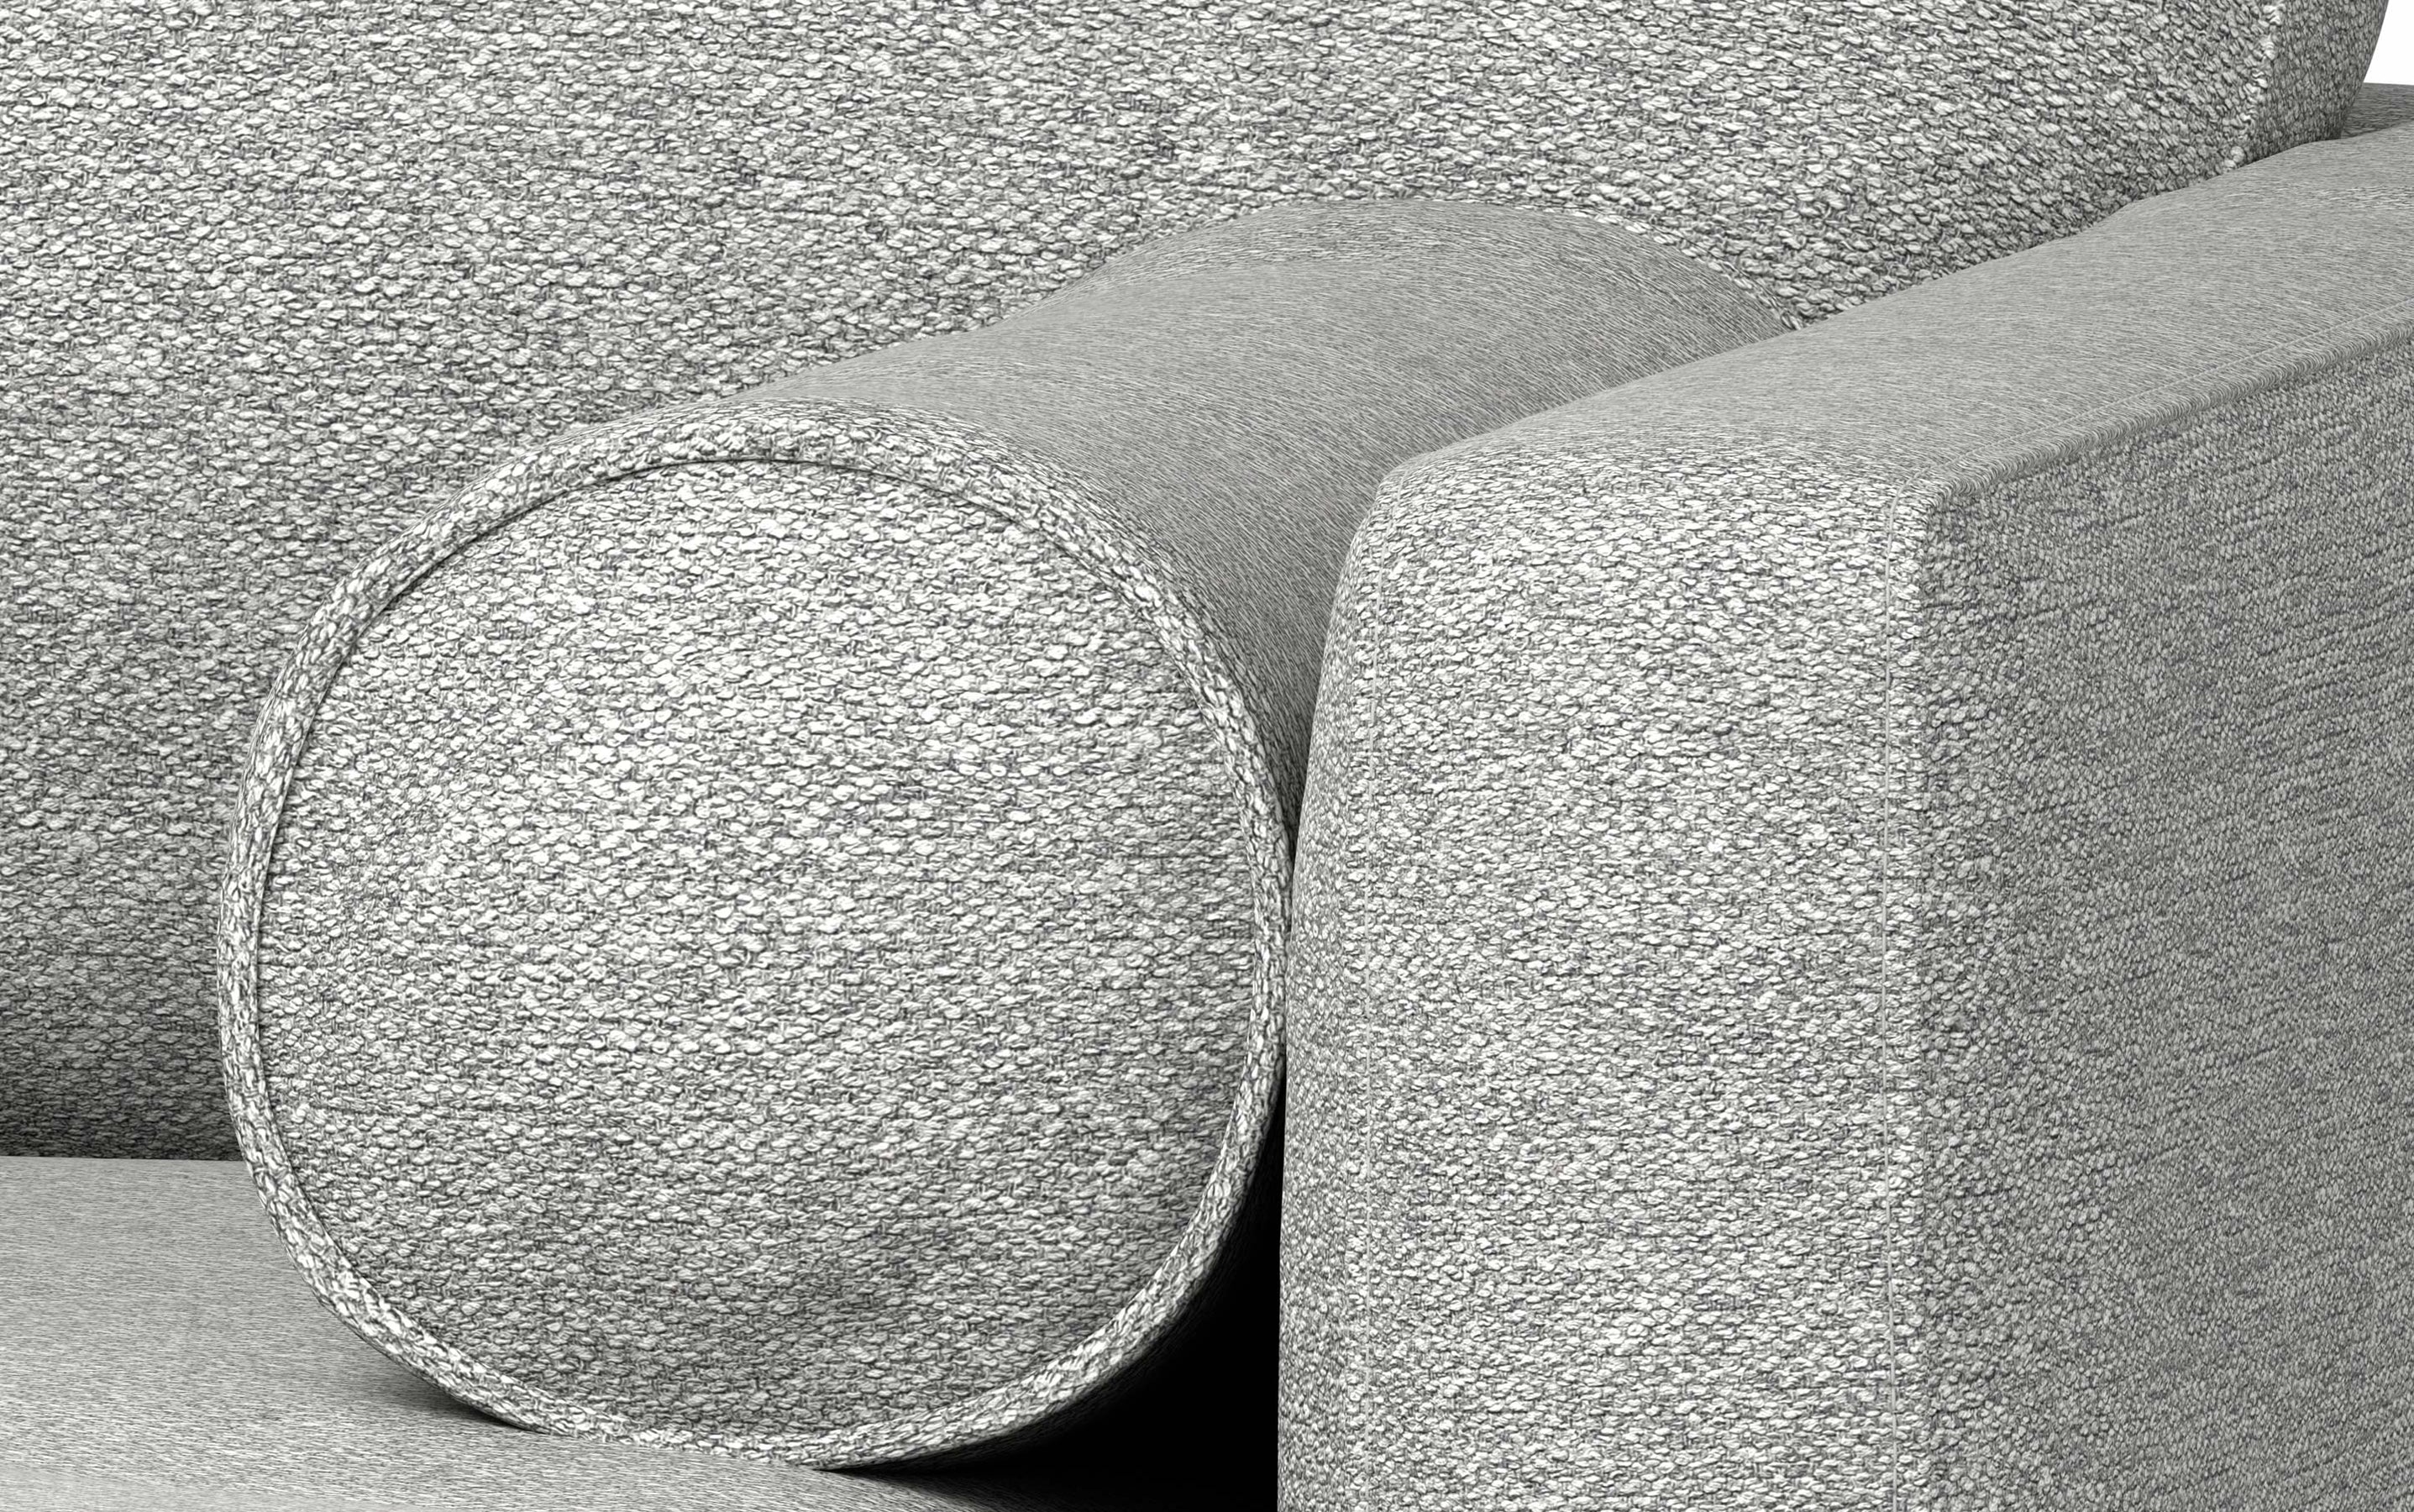 Mist Grey Woven Polyester Fabric | Morrison 88.5 inch Mid Century Sofa